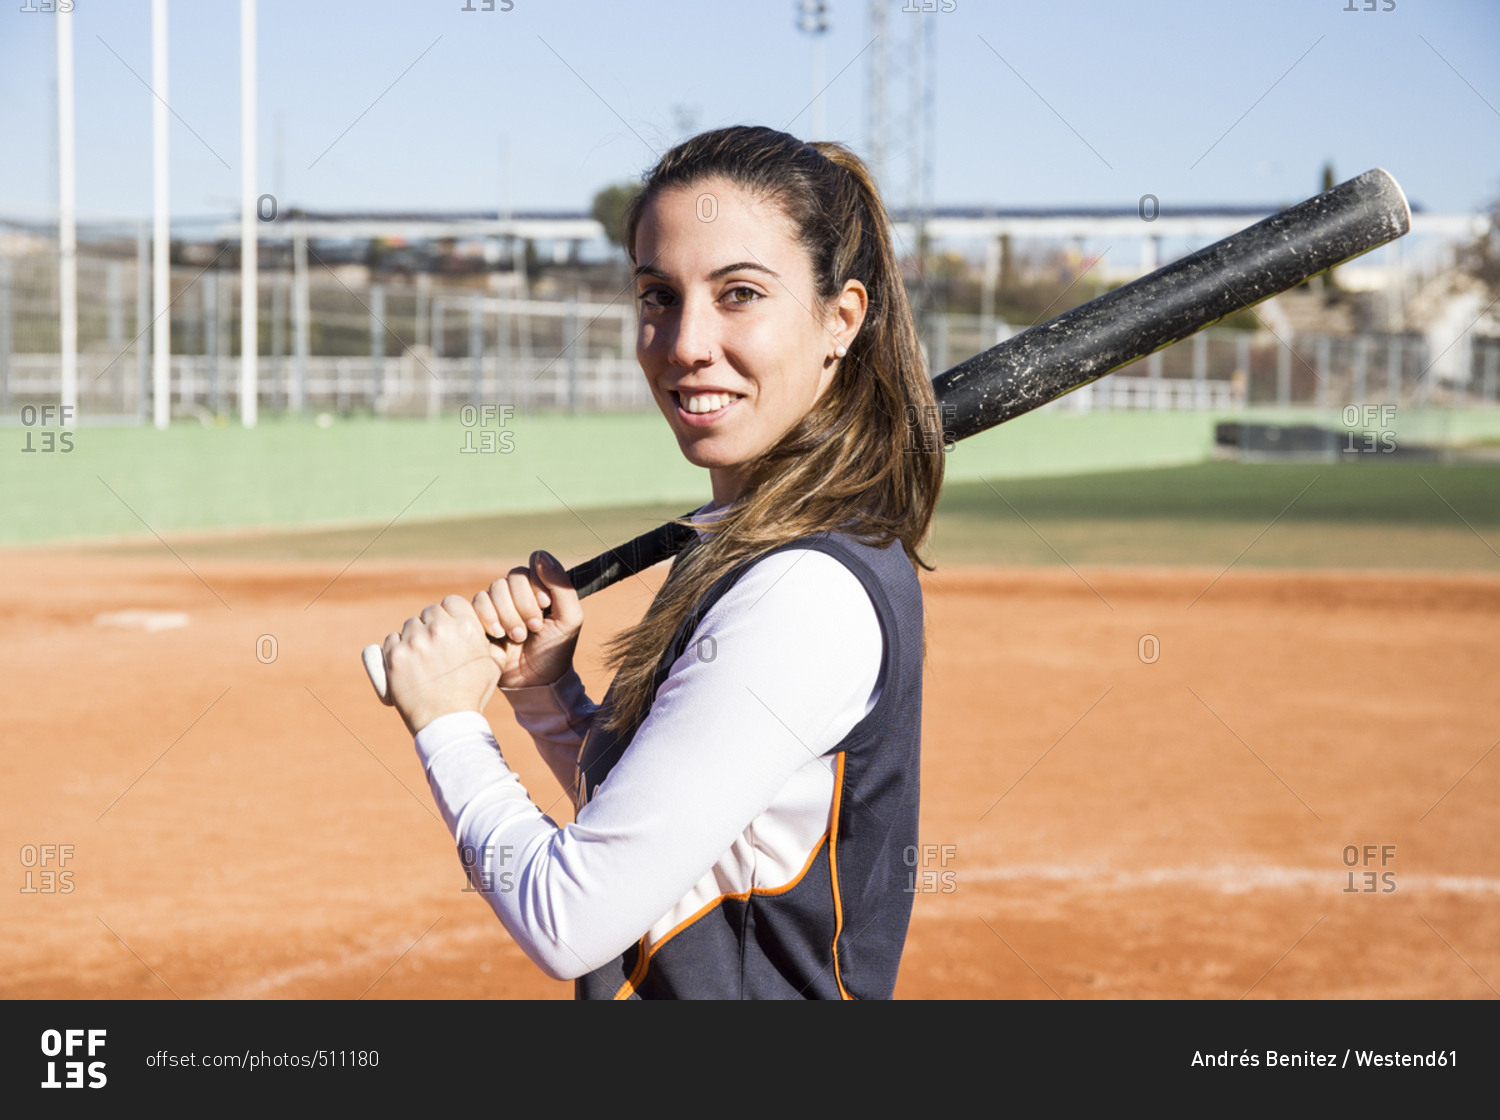 Portrait of smiling female baseball player with a baseball bat